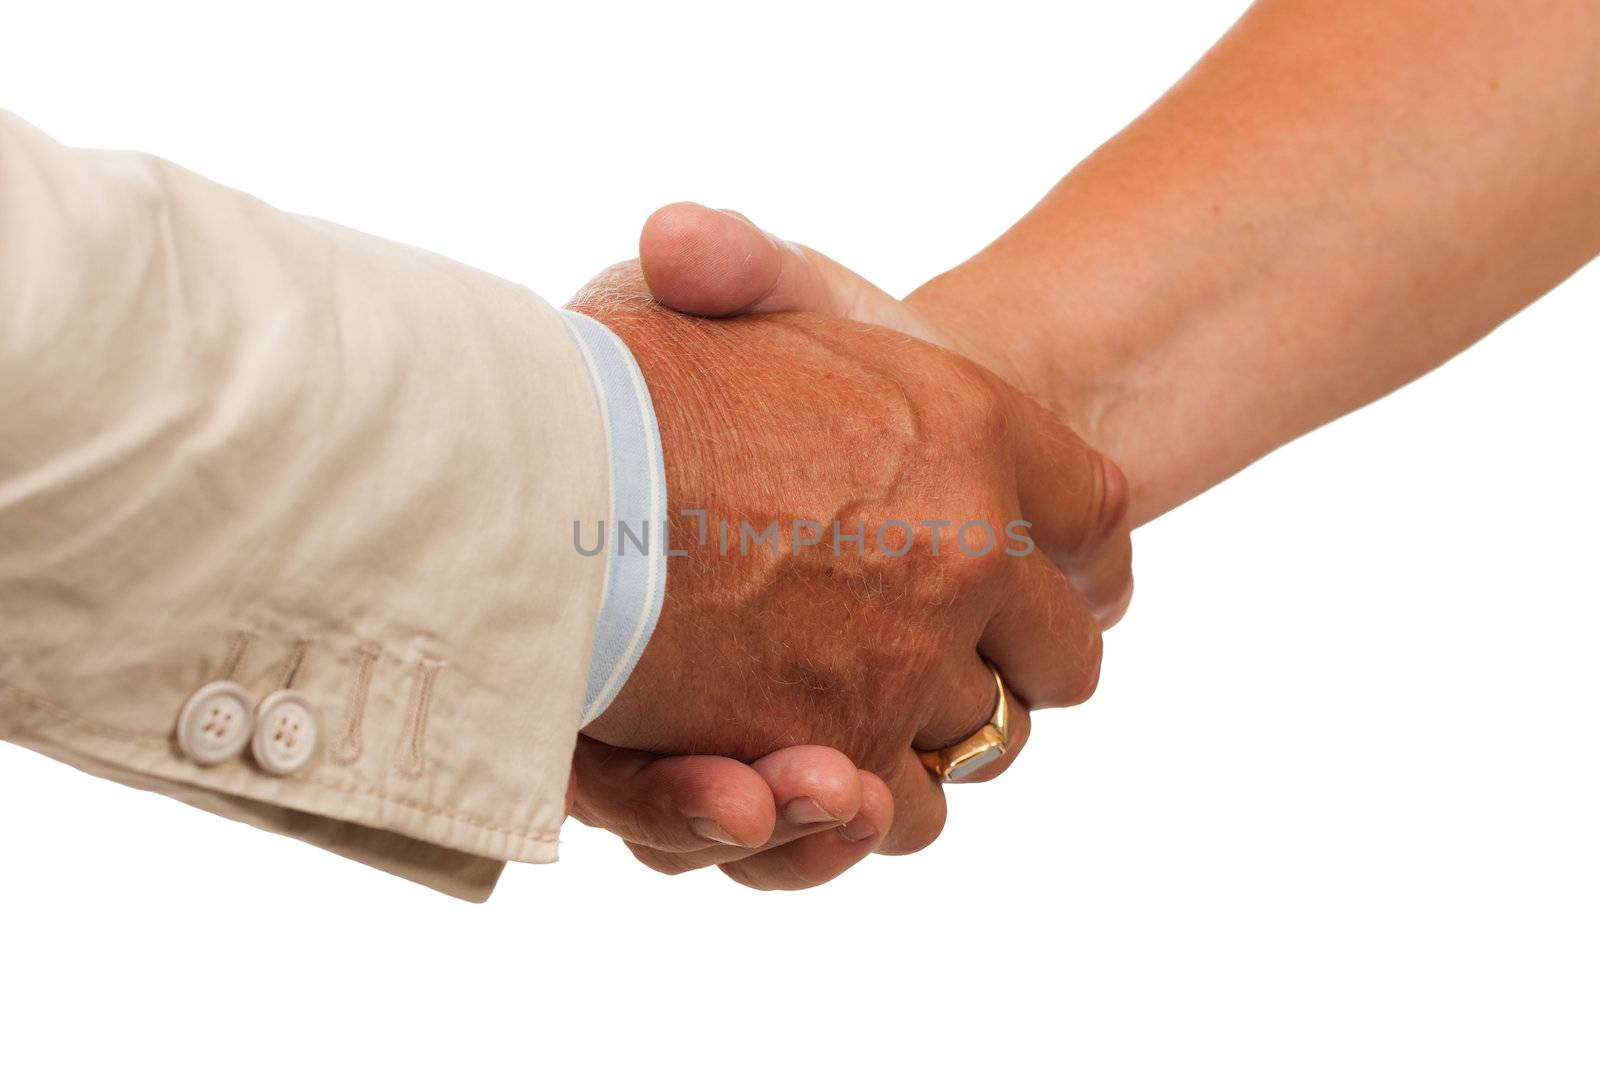 Hand shake between man and woman by Jaykayl